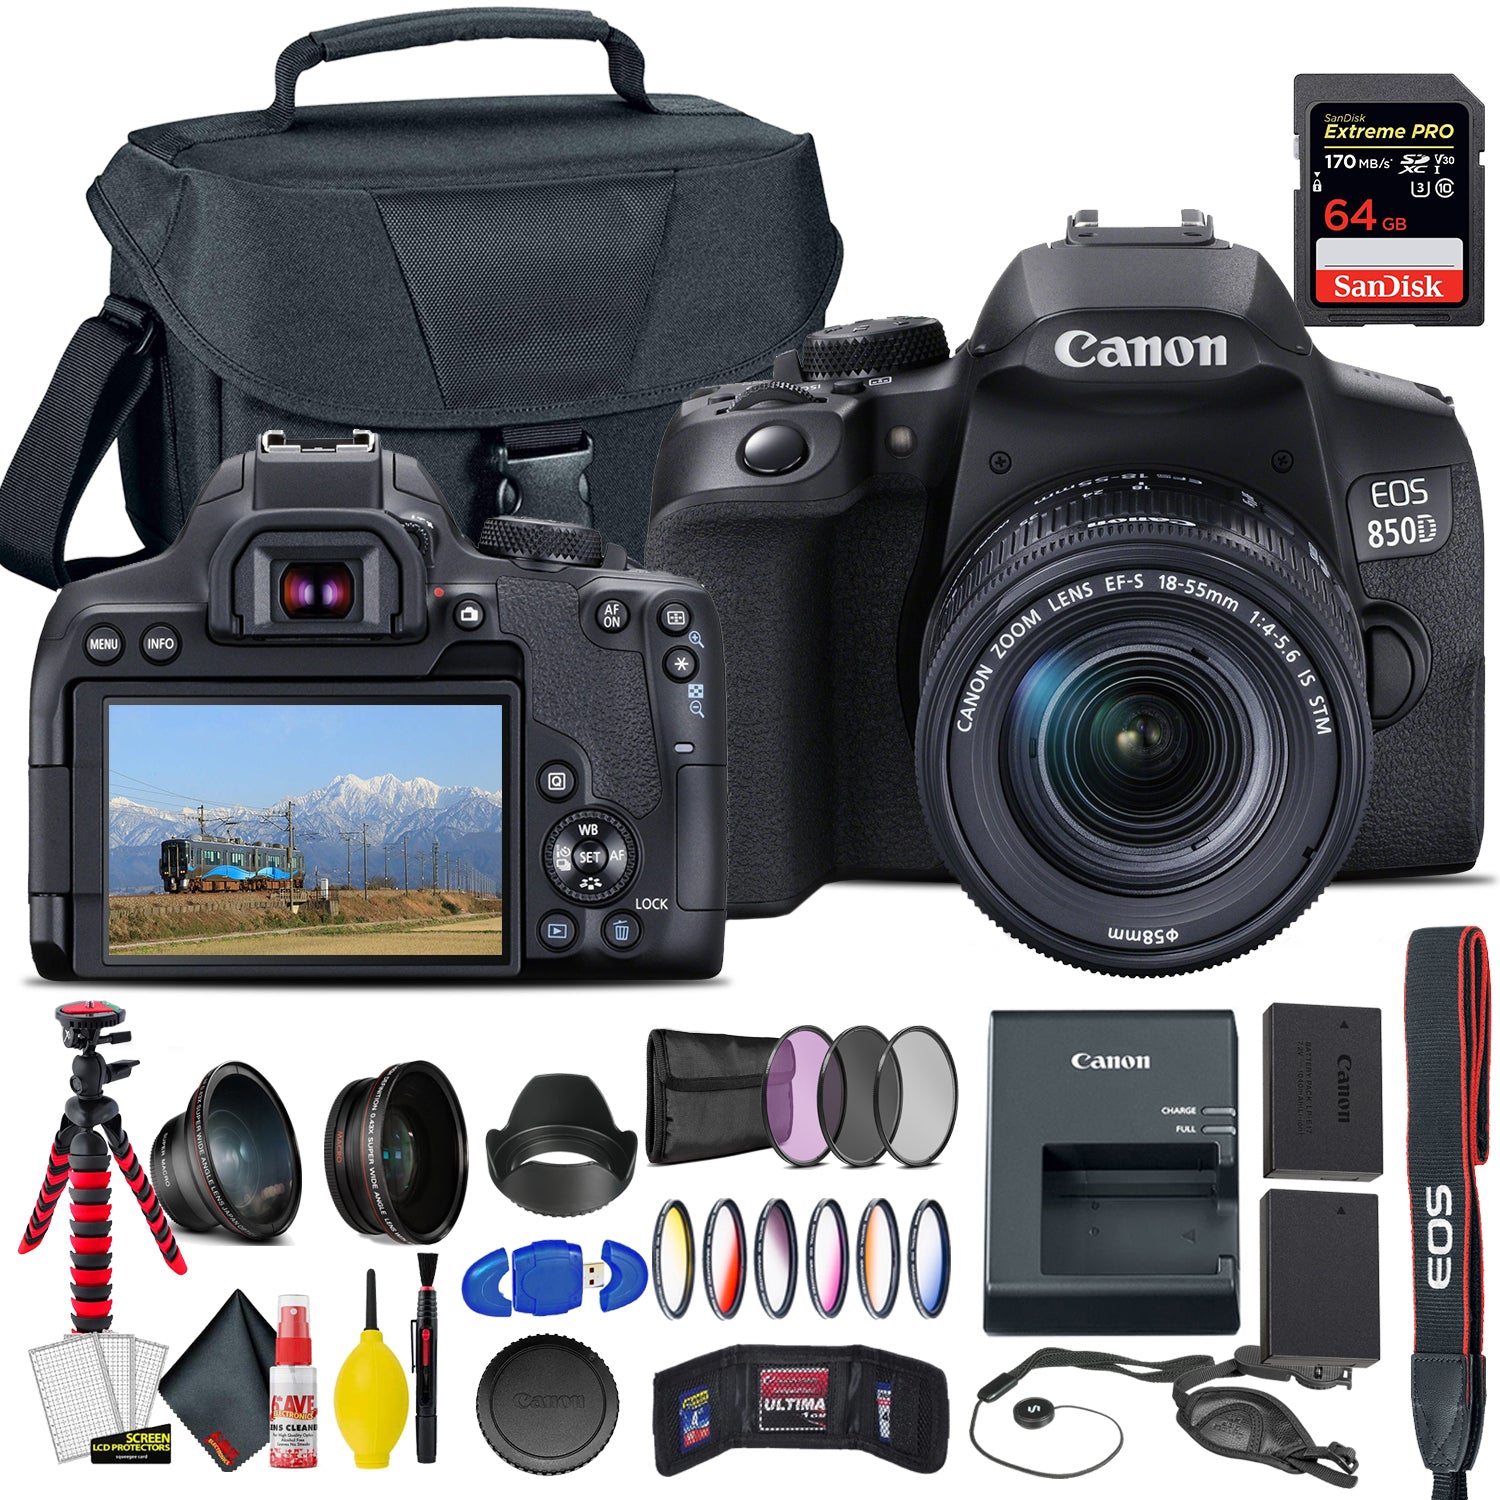 Canon EOS 850D / Rebel T8i DSLR Camera With 18-55mm Lens + Extra Lenses & Battery Bundle